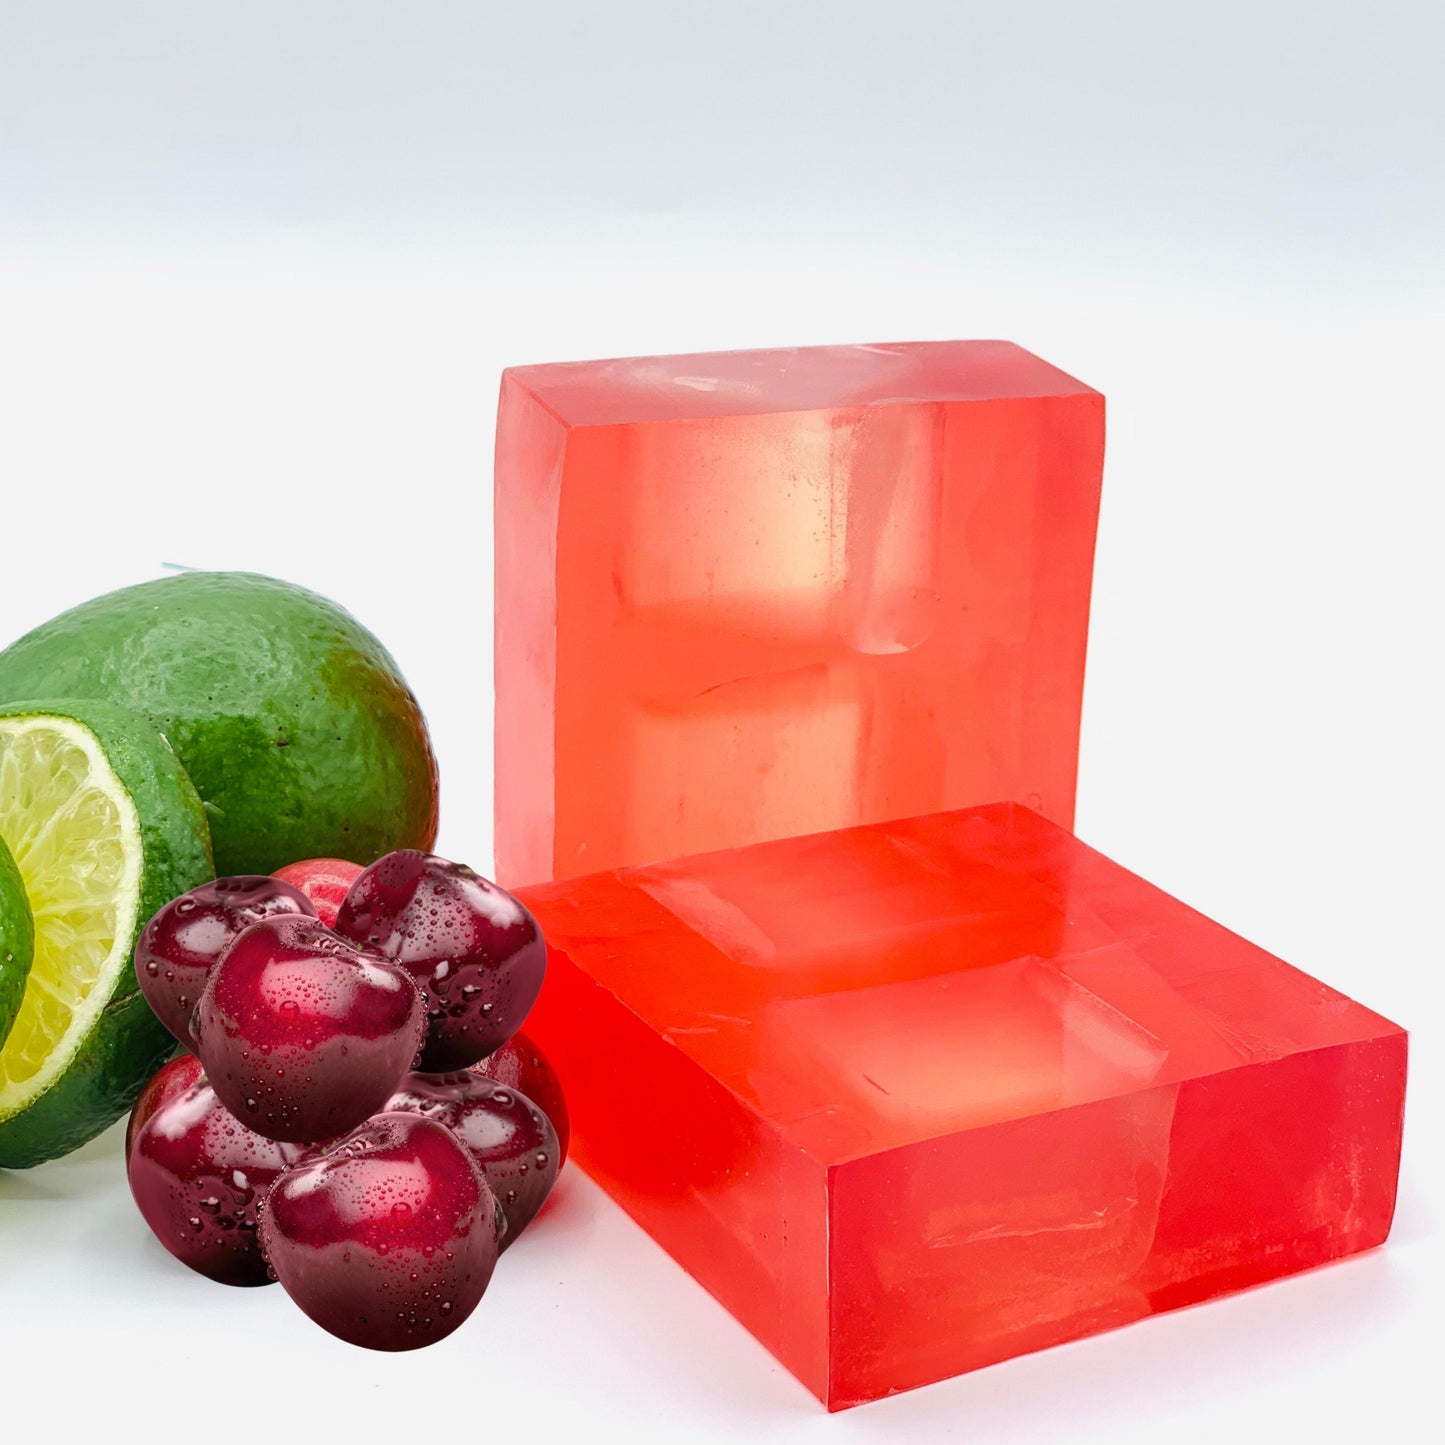 Cherry Limeade Natural Glycerin Soap